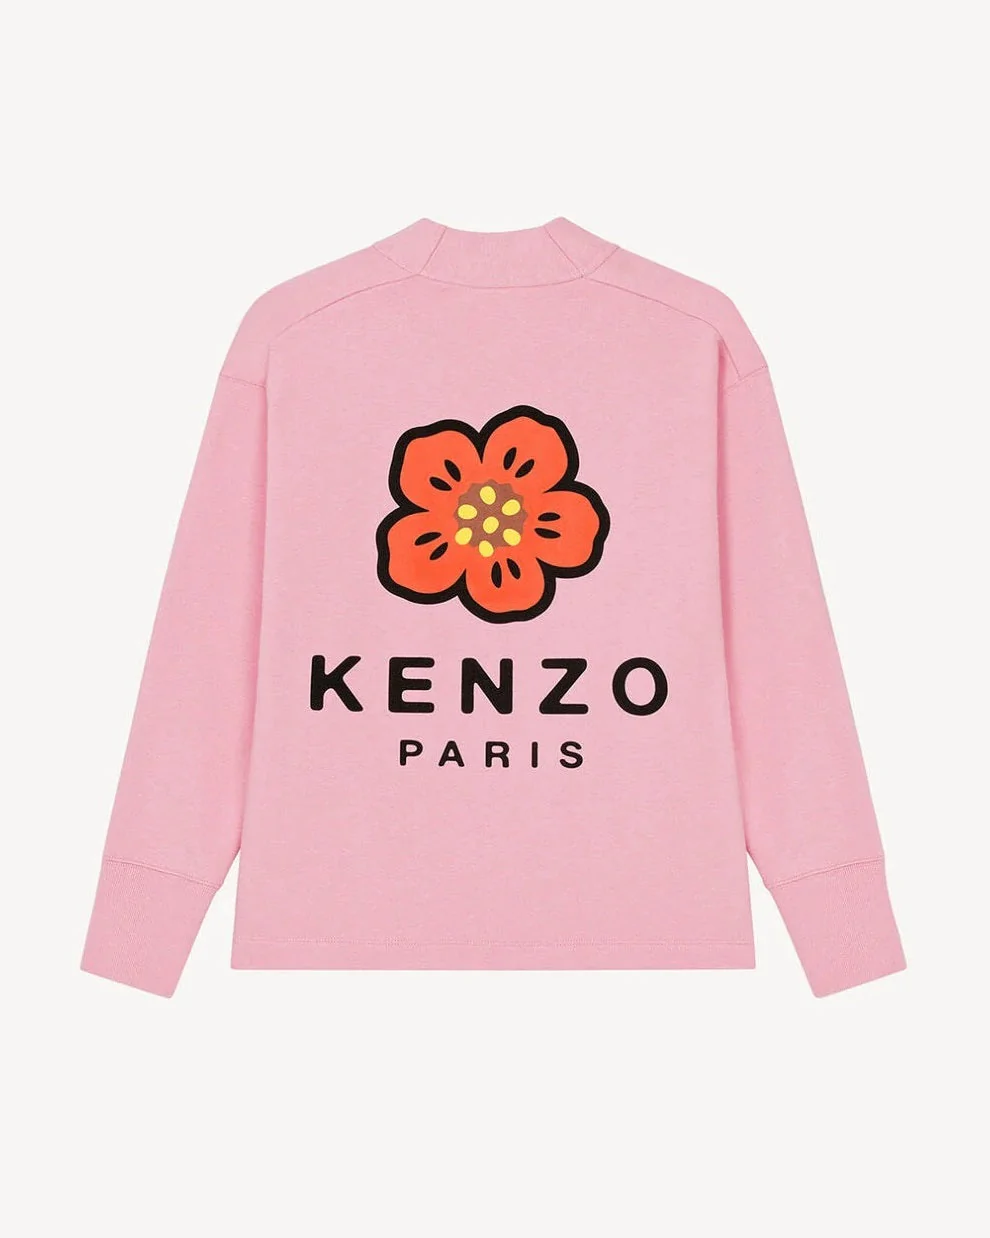 Kenzo "Boke Flower" Rose Cardigan